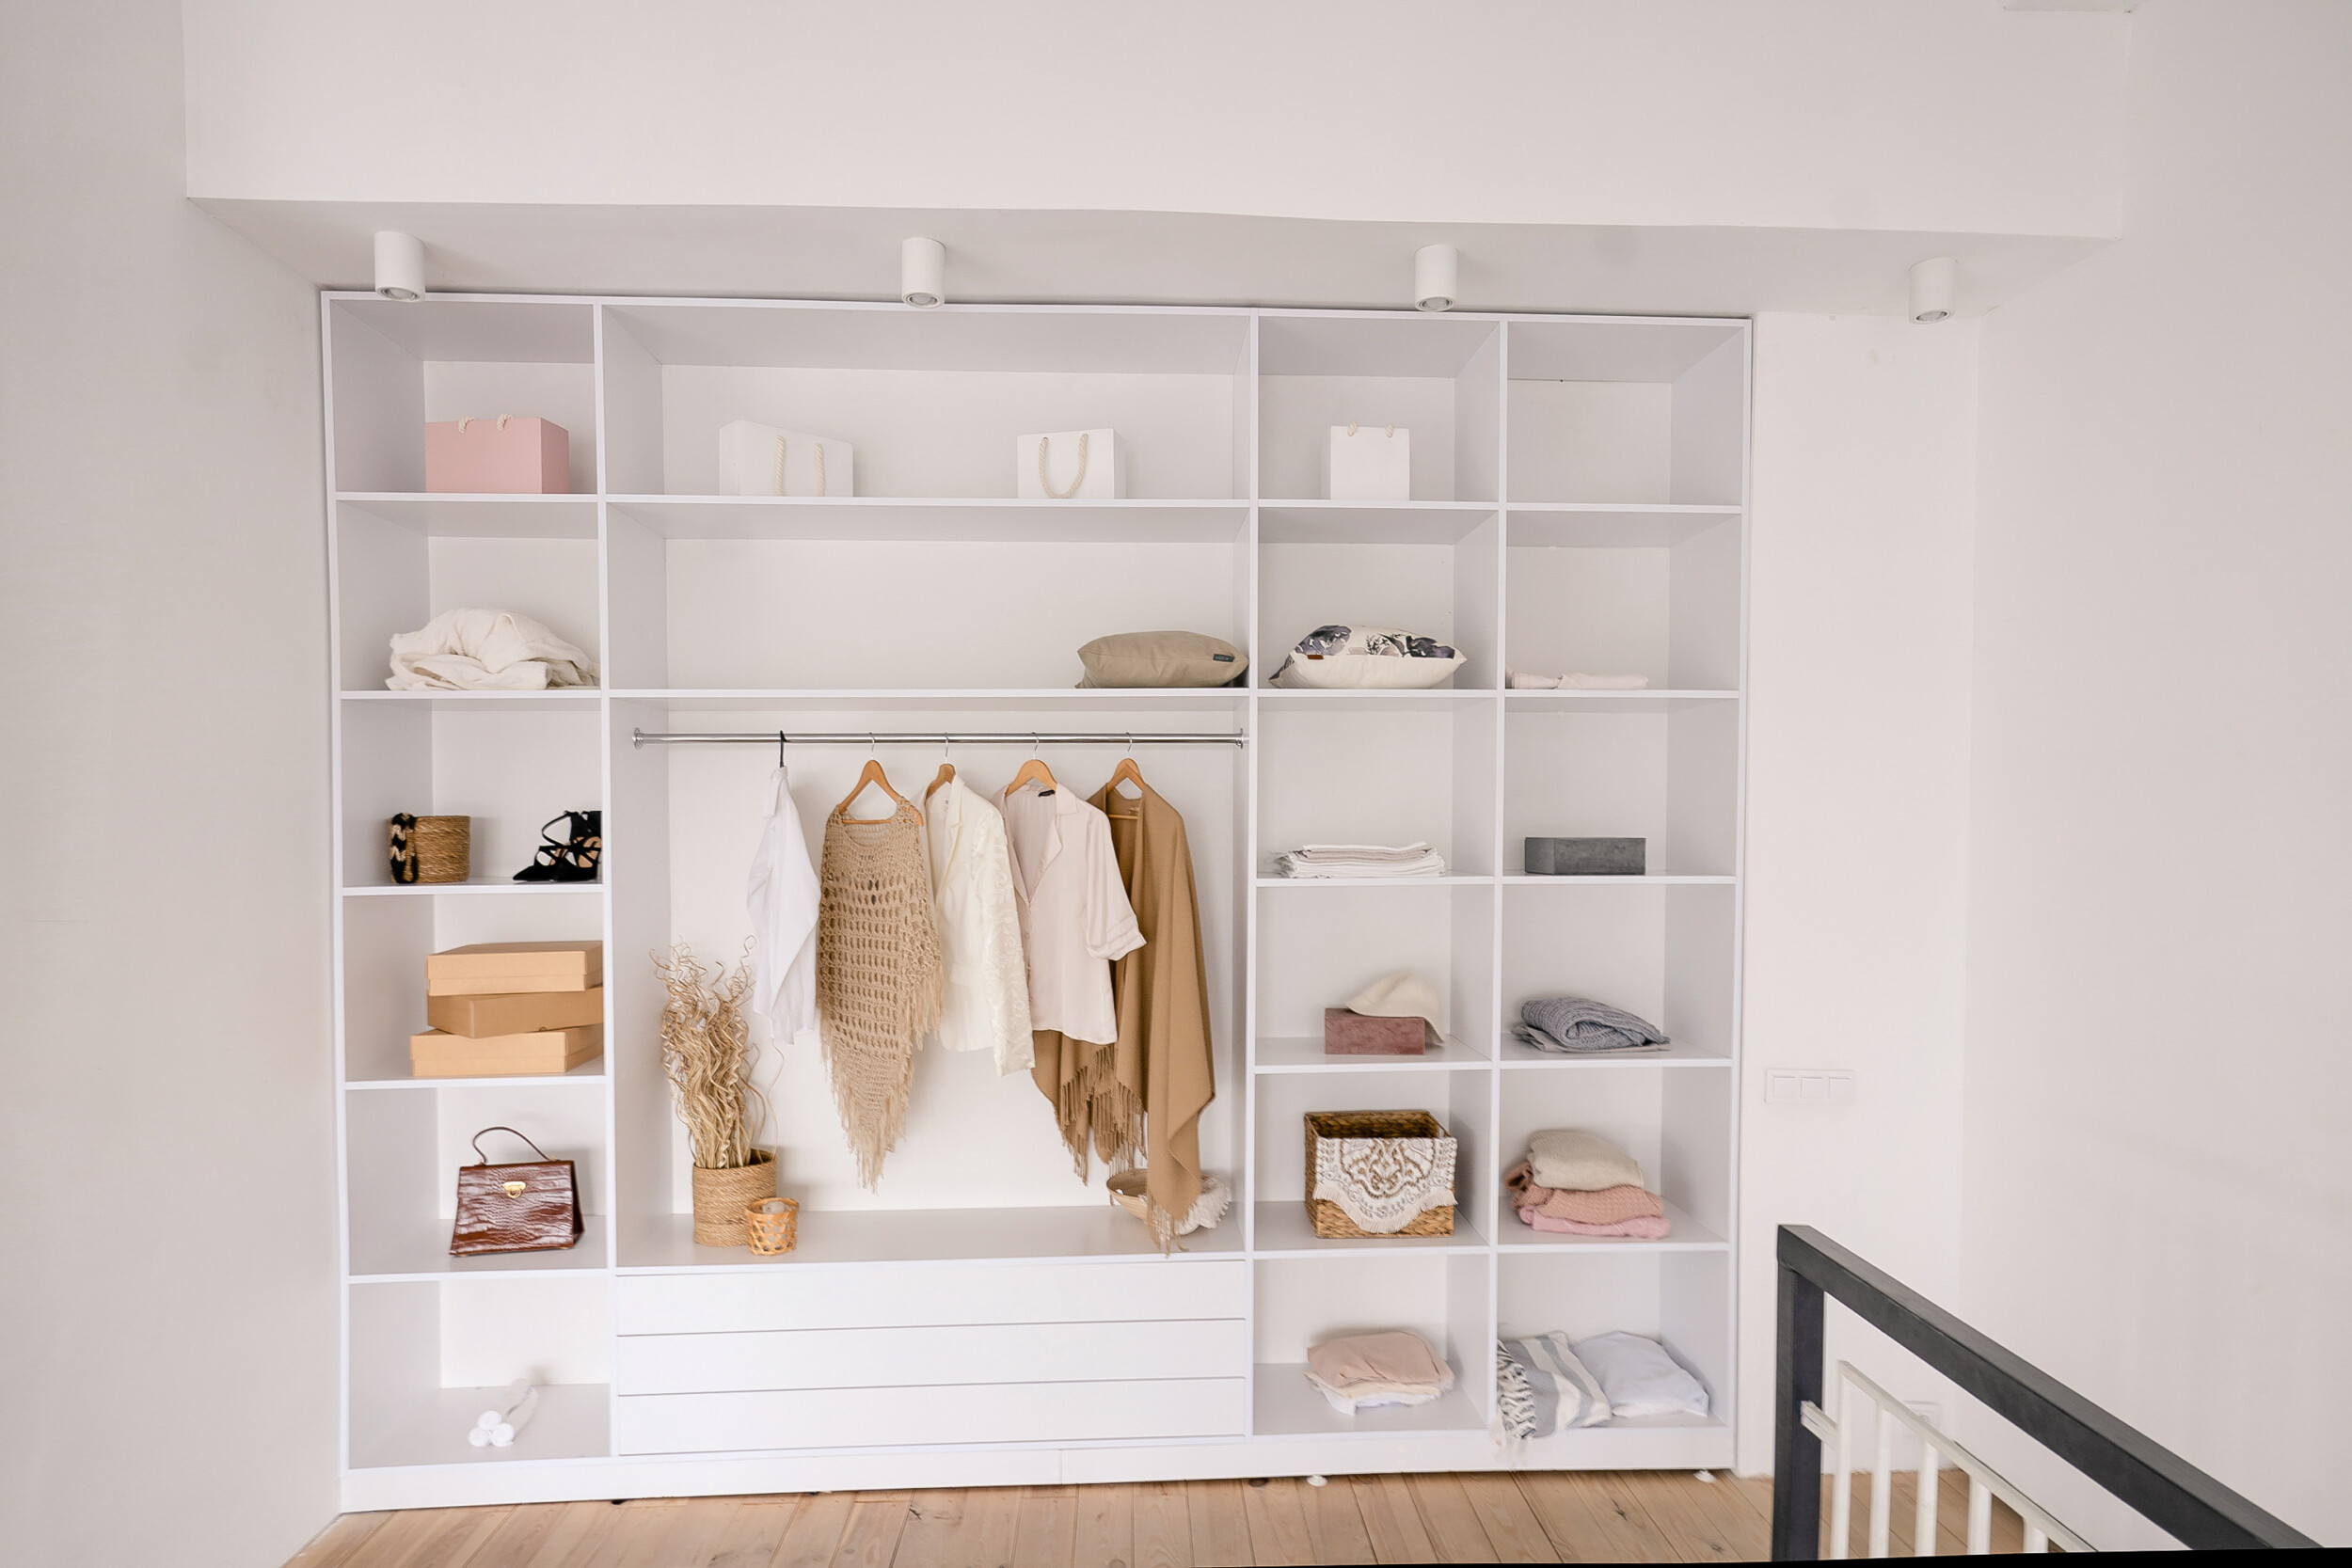 Smart Closet Storage Ideas From Pinterest - Décor Aid